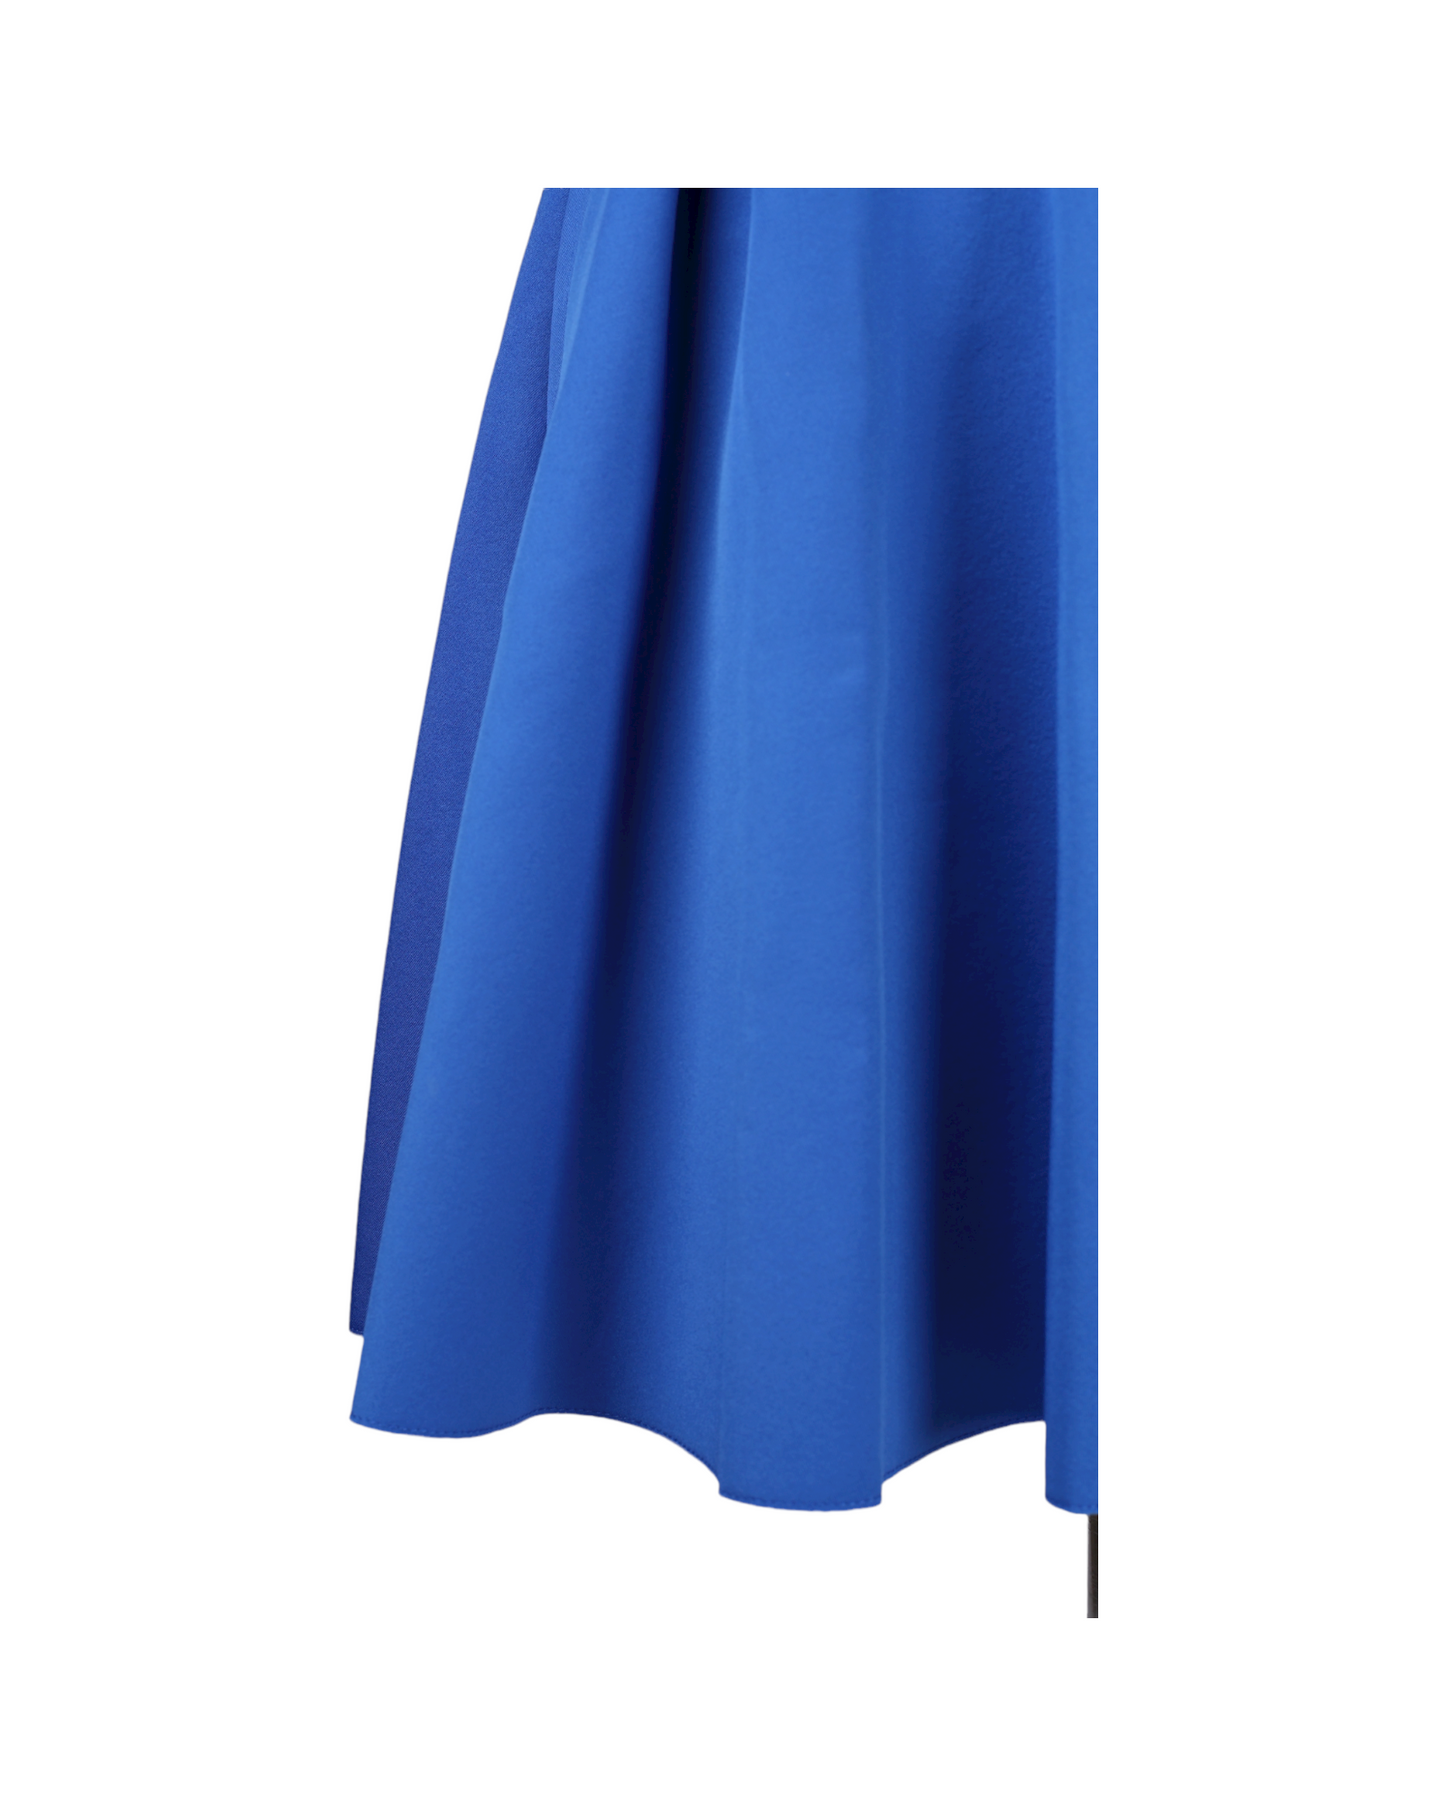 Maje Mini Electric Blue Summer Dress